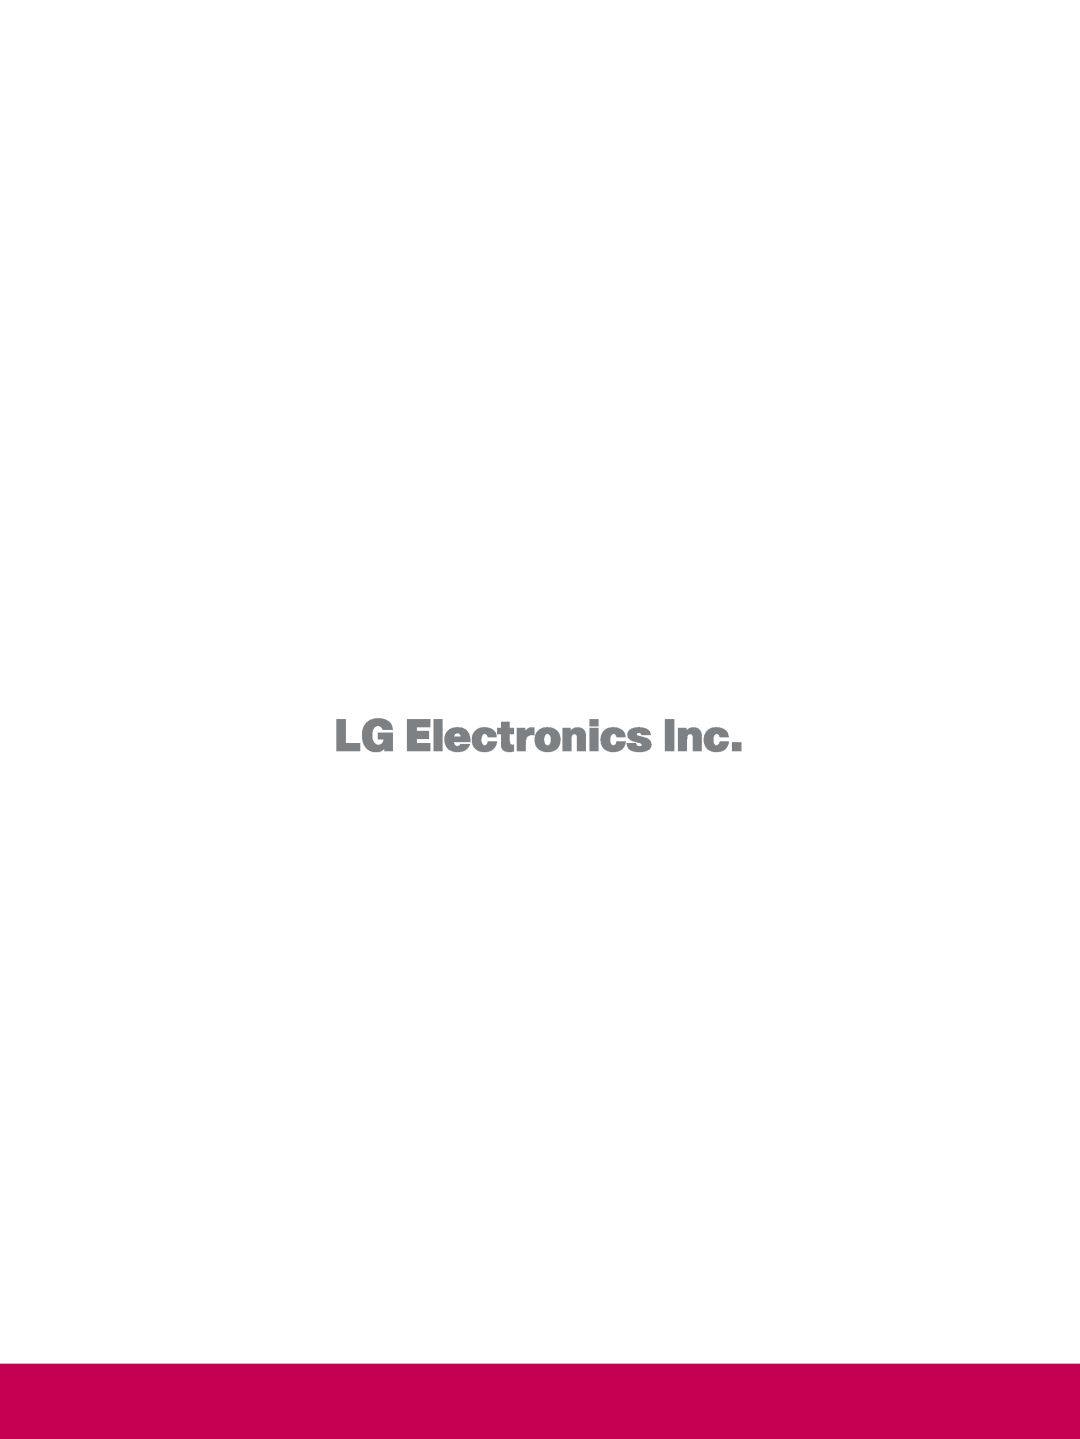 LG Electronics 60PG60, 5270, 5260, 50PG60, 4770, 4760, 42PG25, 4270, 4260, 4230, 4250, 3760, 3750, 3730, 3270, 3260, 4750, 50PG25, 5250 